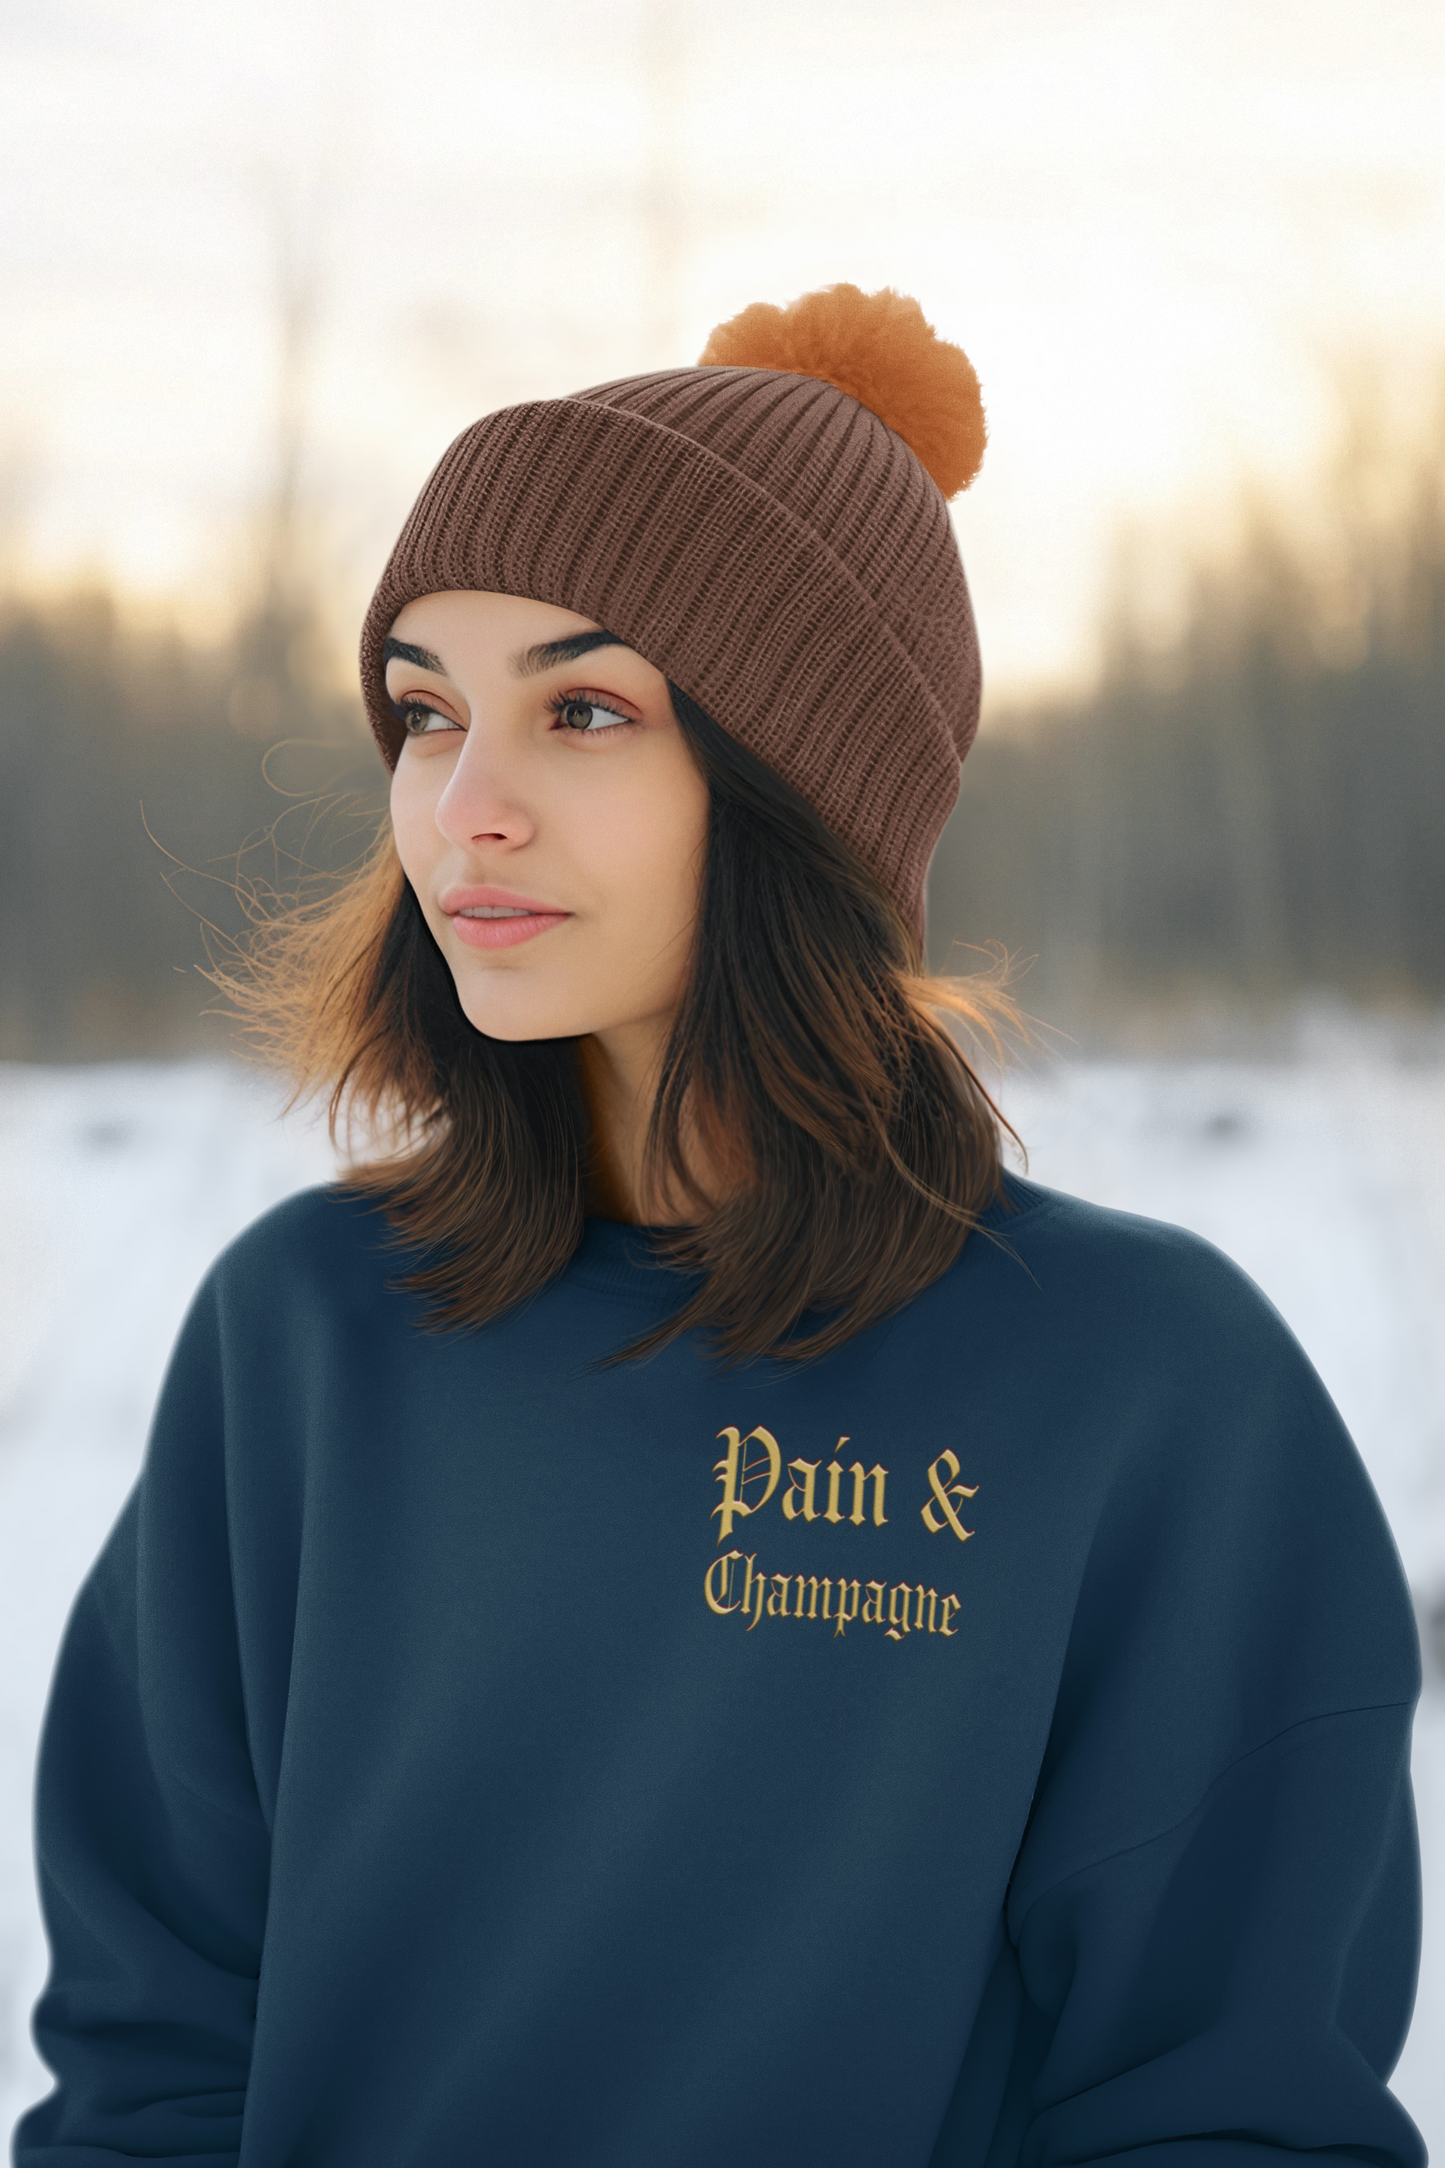 PAIN & CHAMPAGNE - Unisex